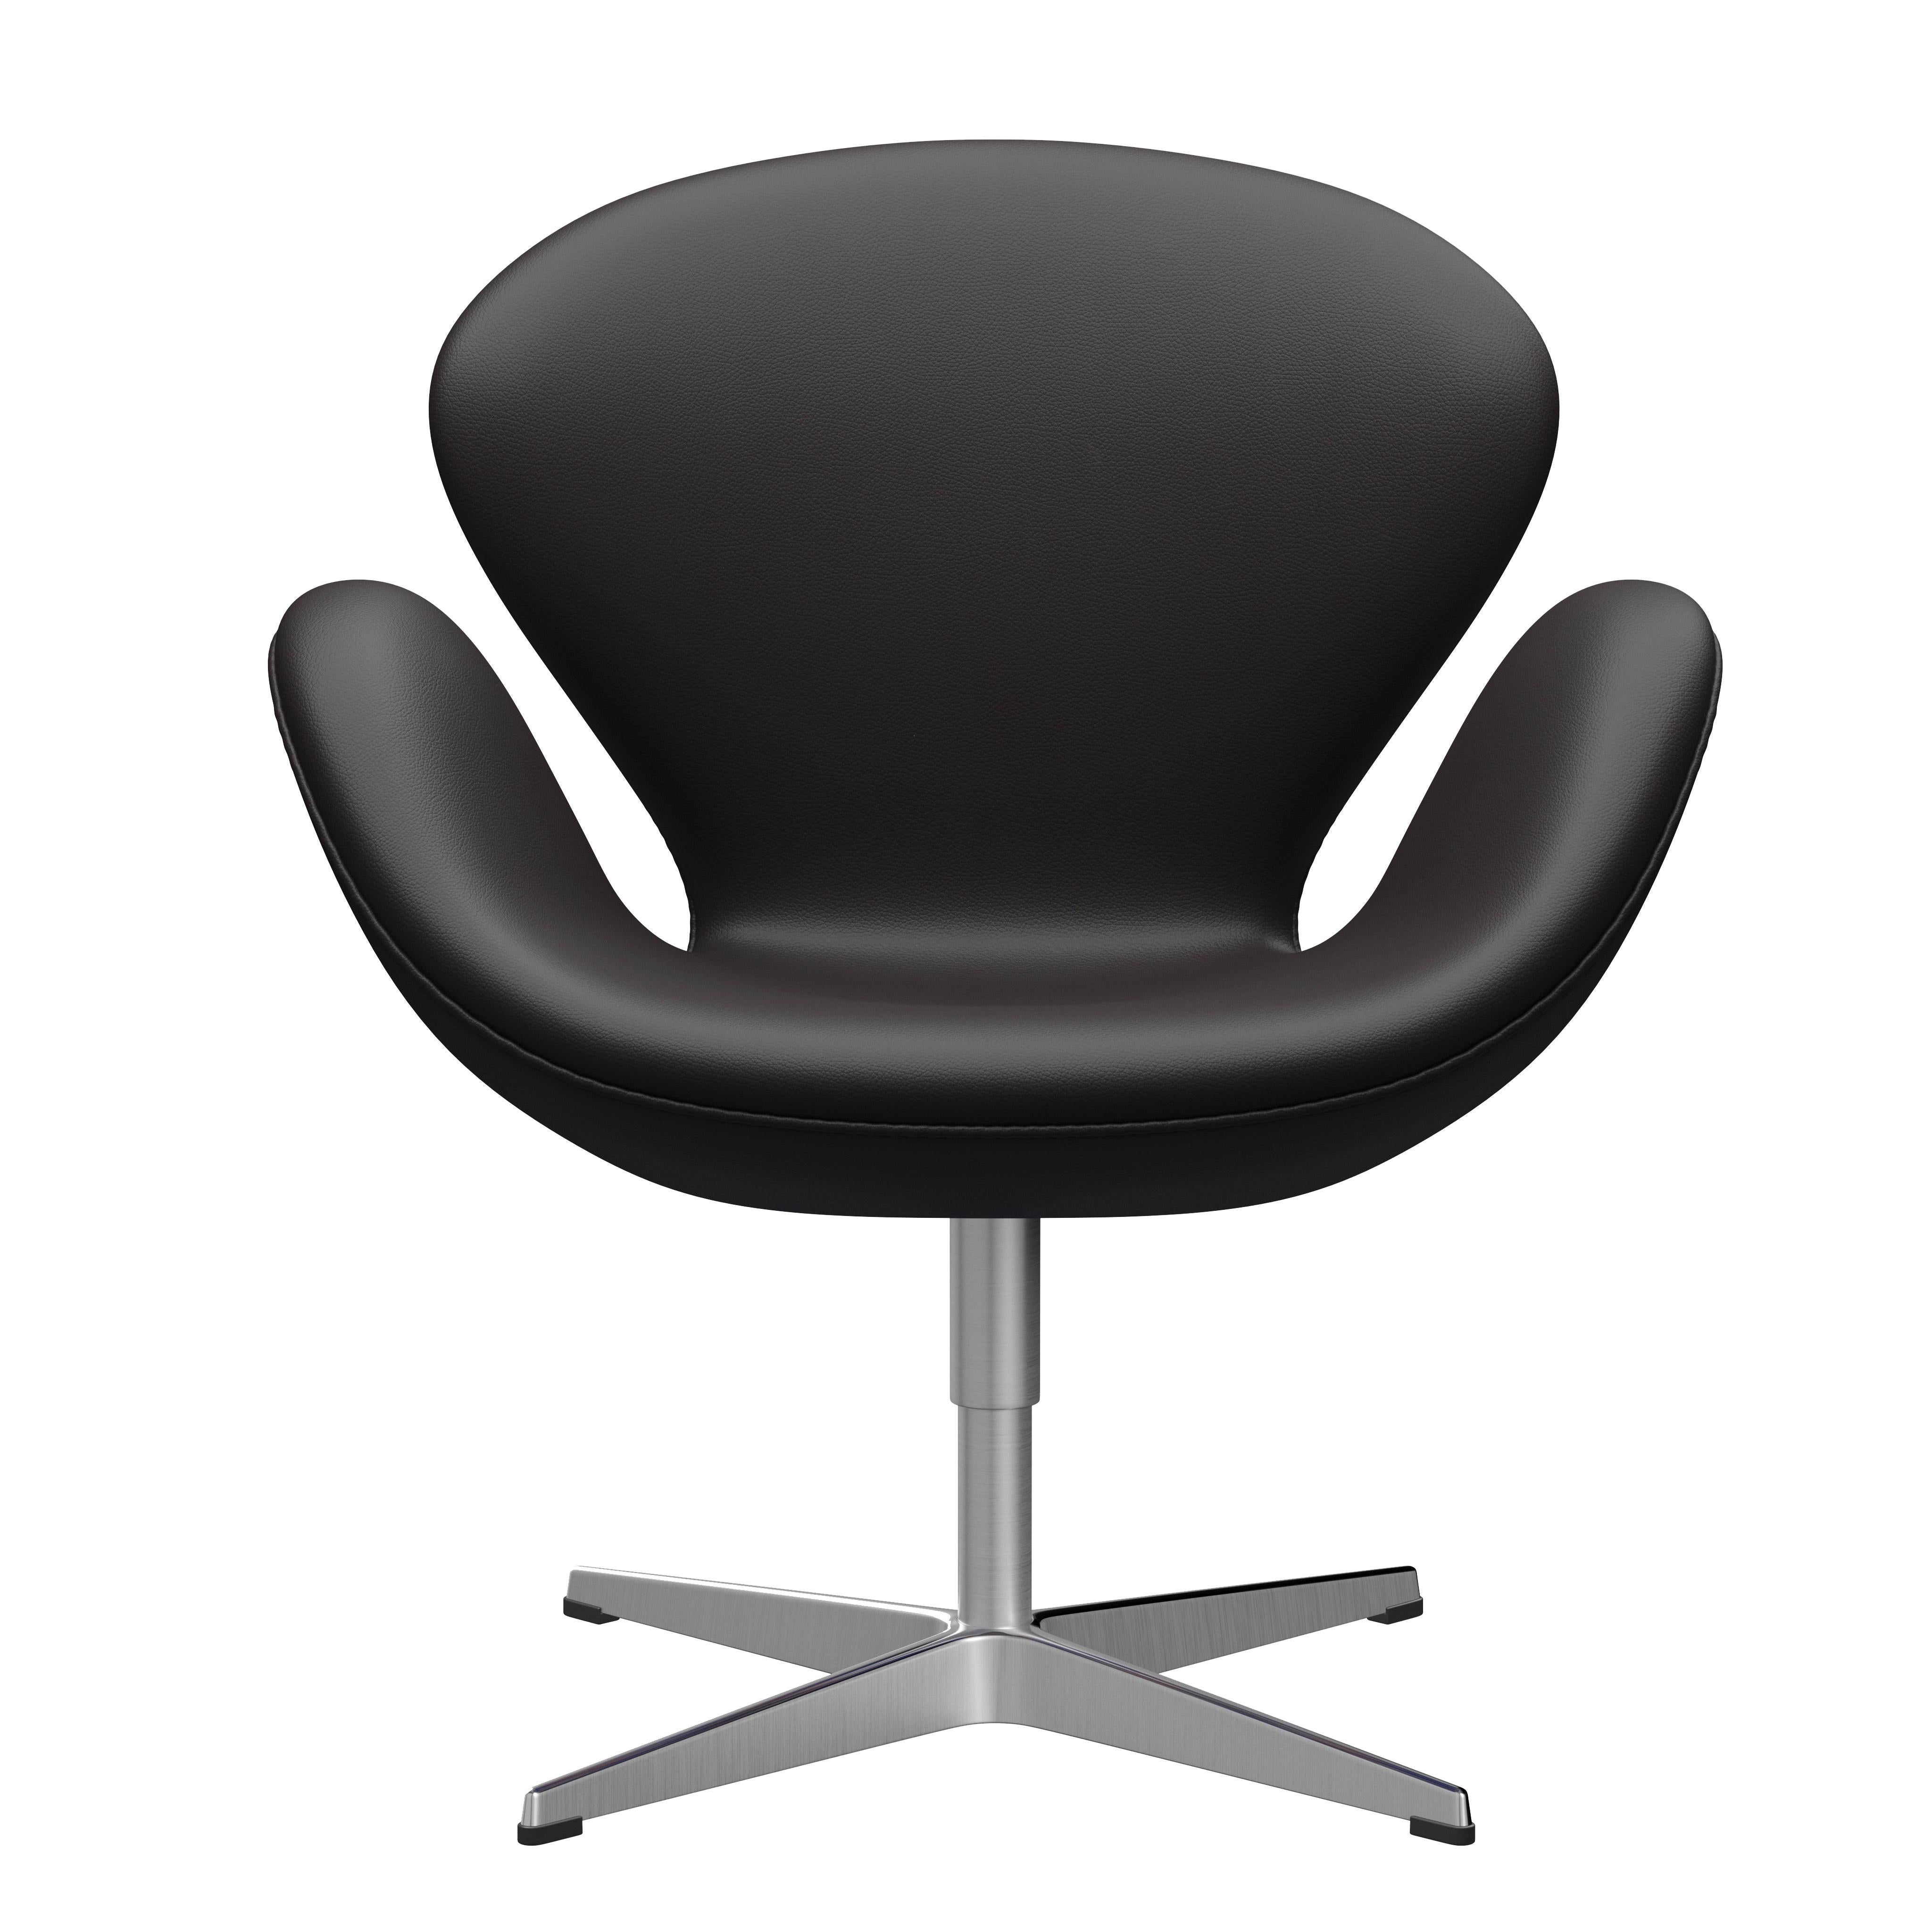 Arne Jacobsen 'Swan' Chair for Fritz Hansen in Leather Upholstery (Cat. 4) For Sale 9